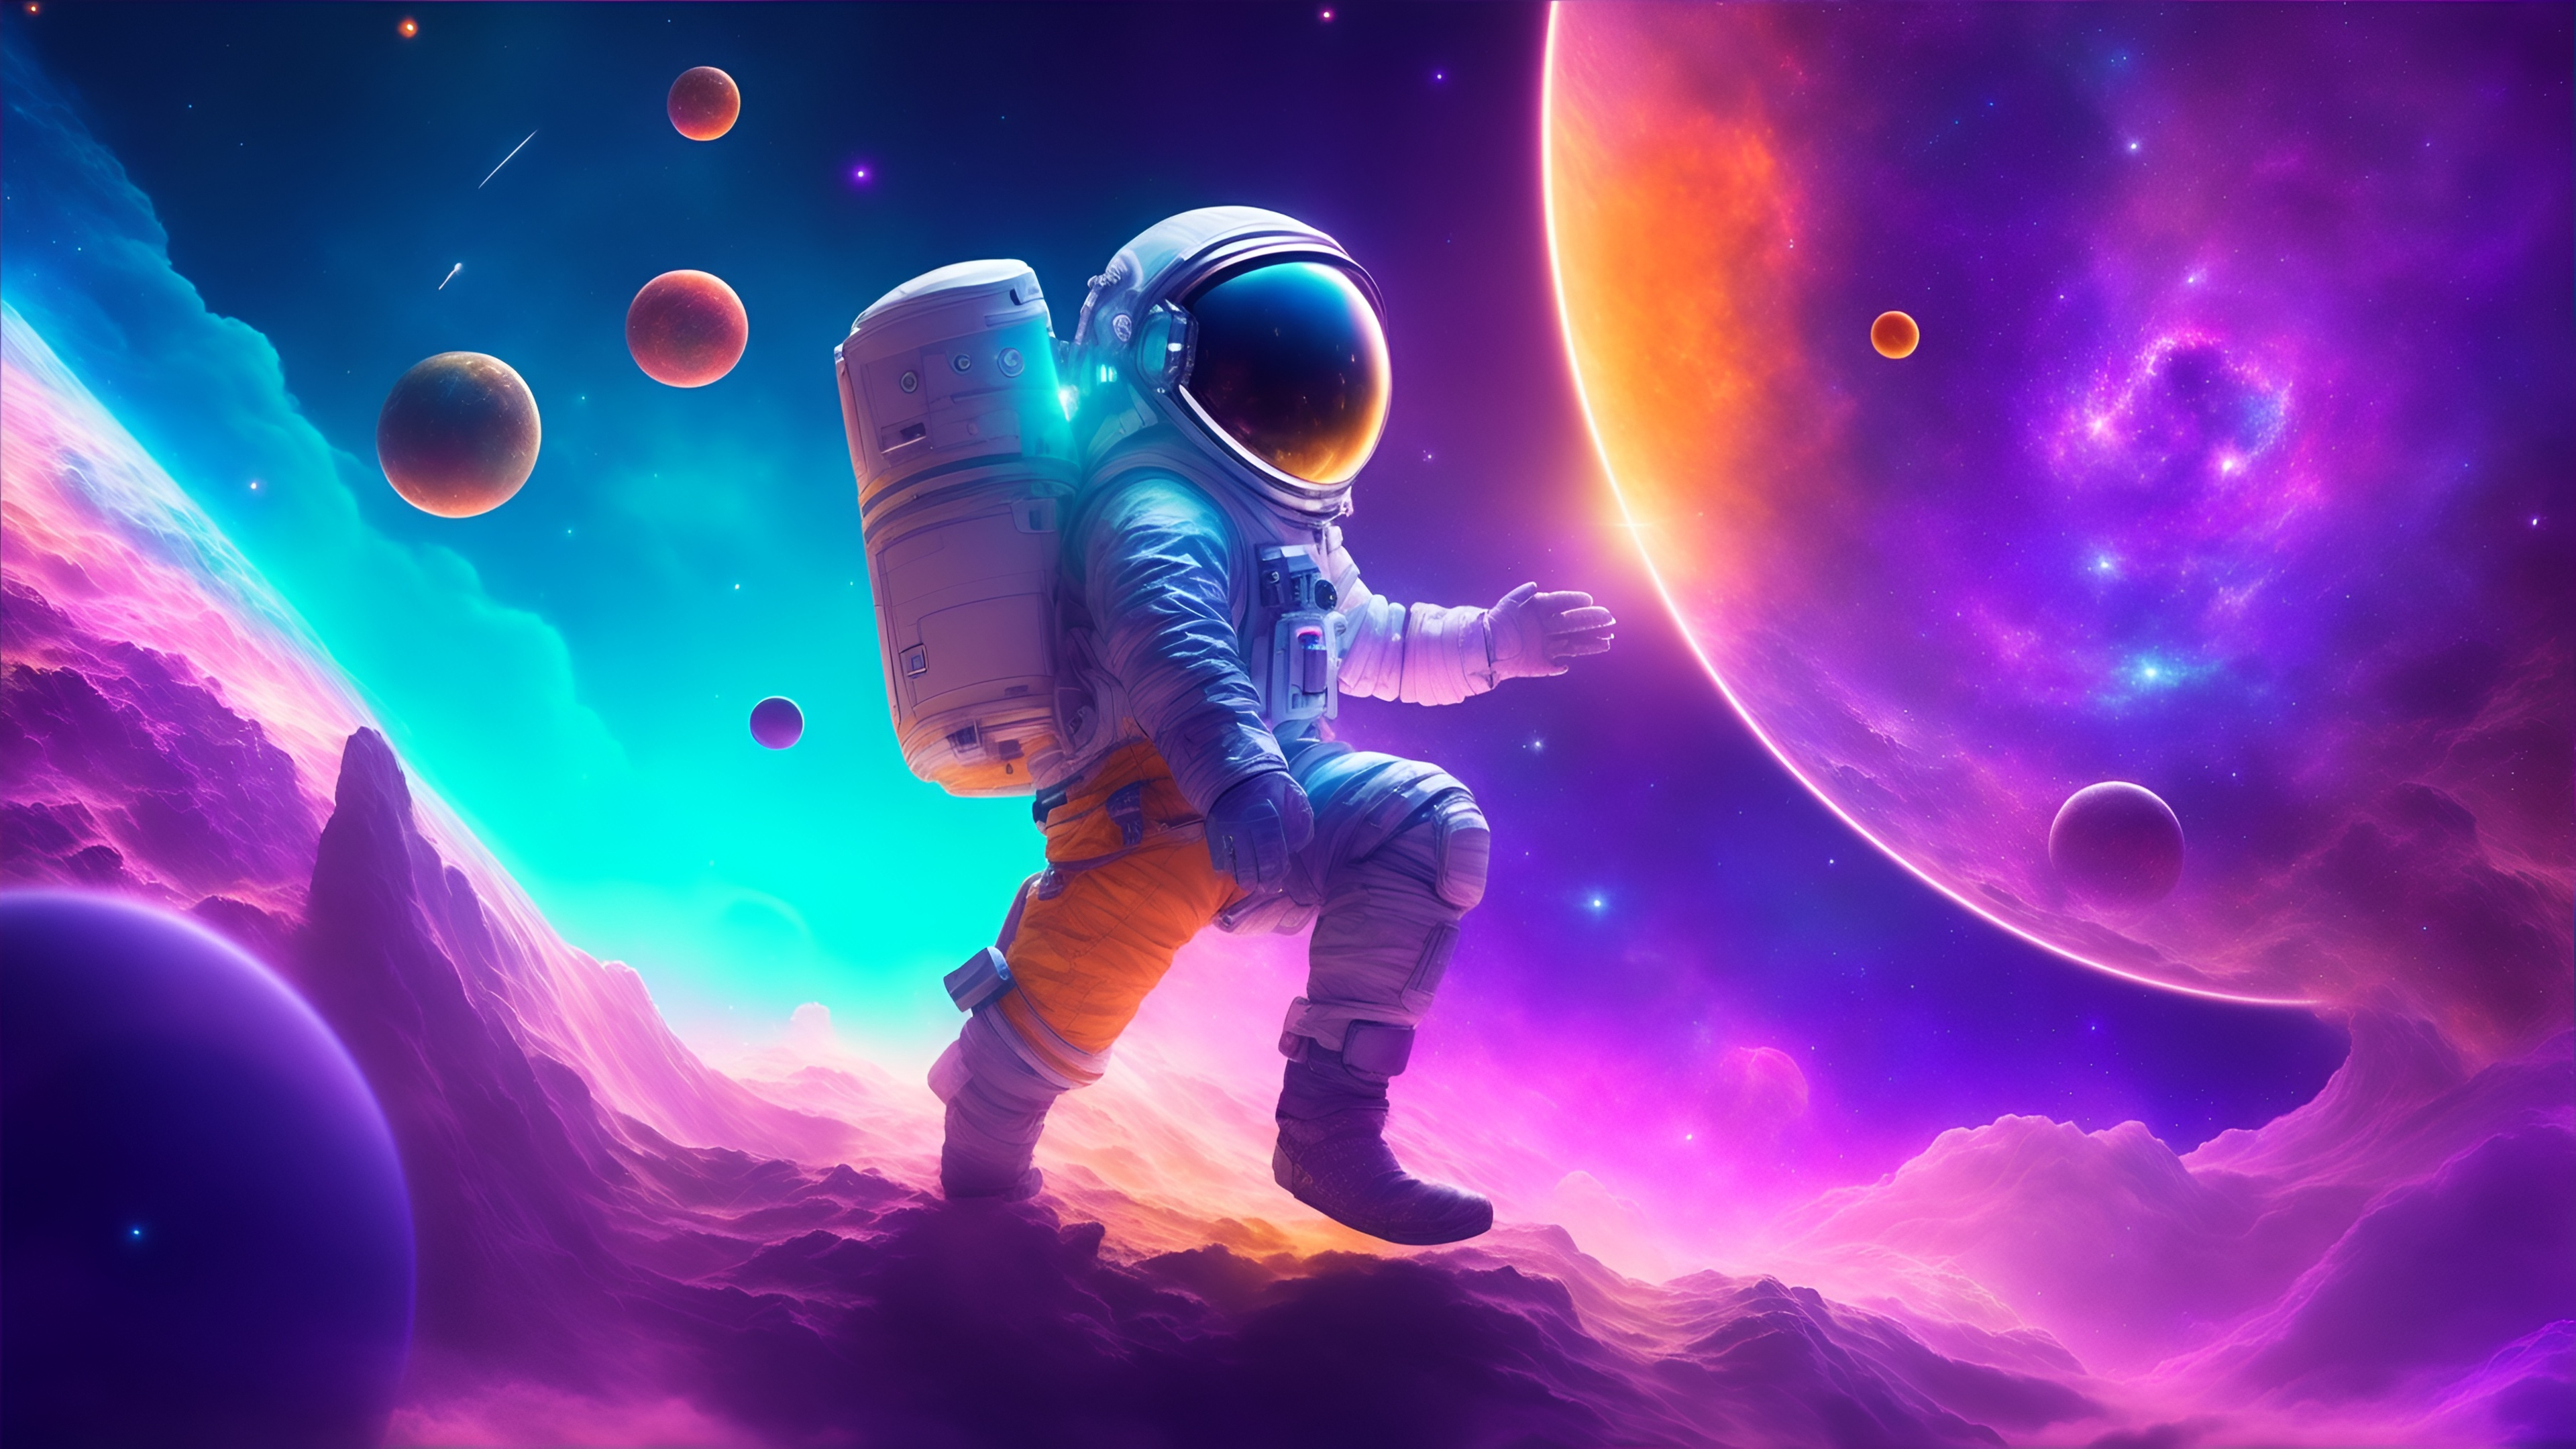 Astronaut space aesthetic iPhone wallpaper, | Premium Photo - rawpixel